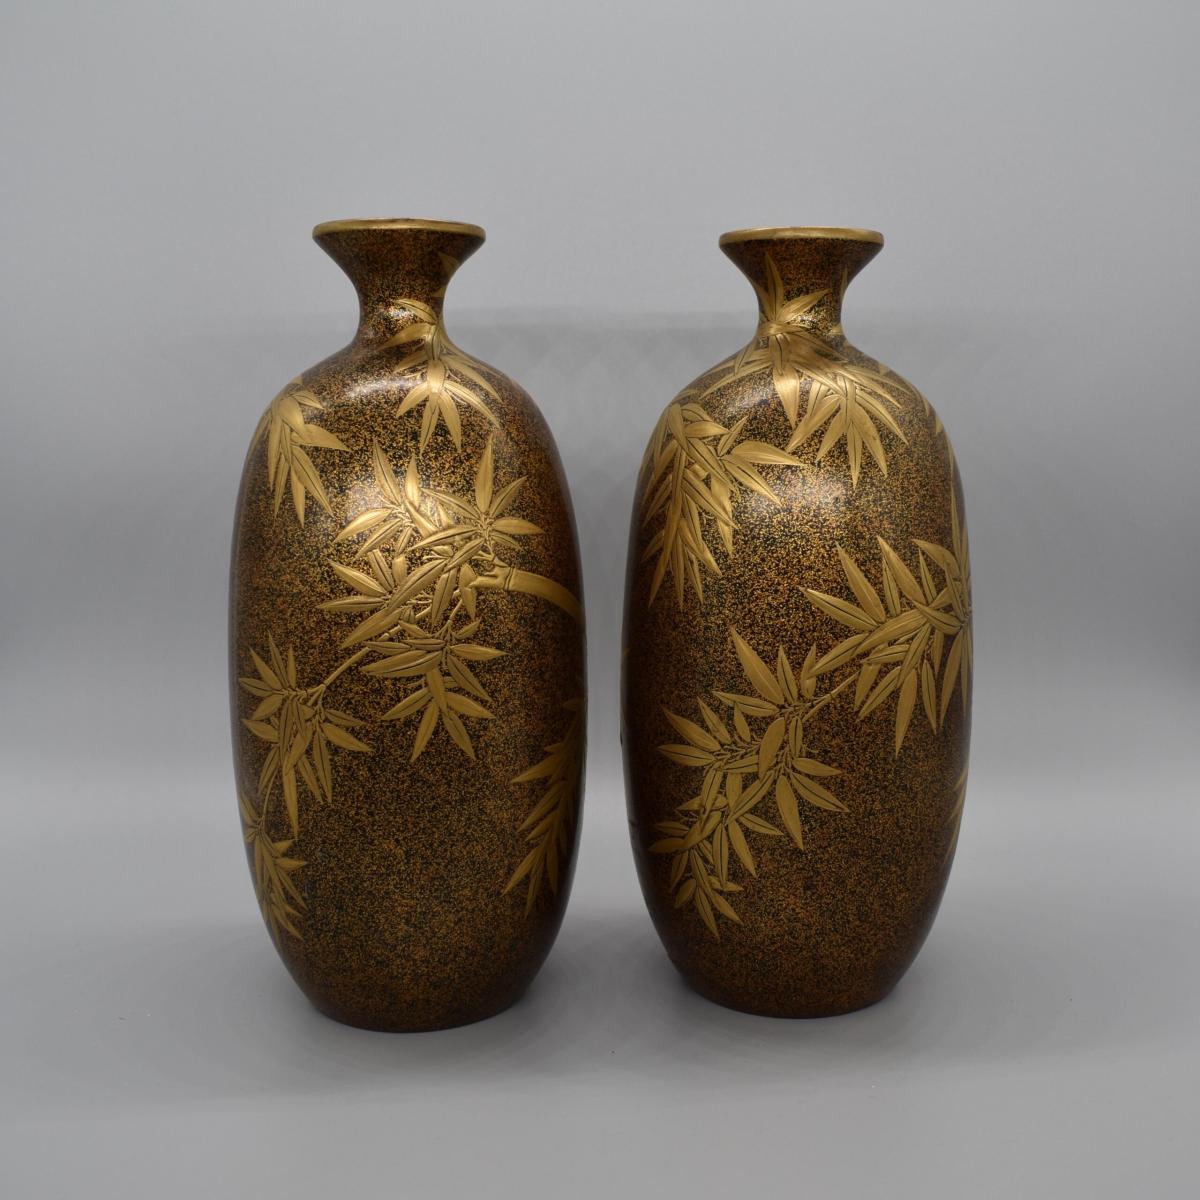 Gold lacquer sake bottles